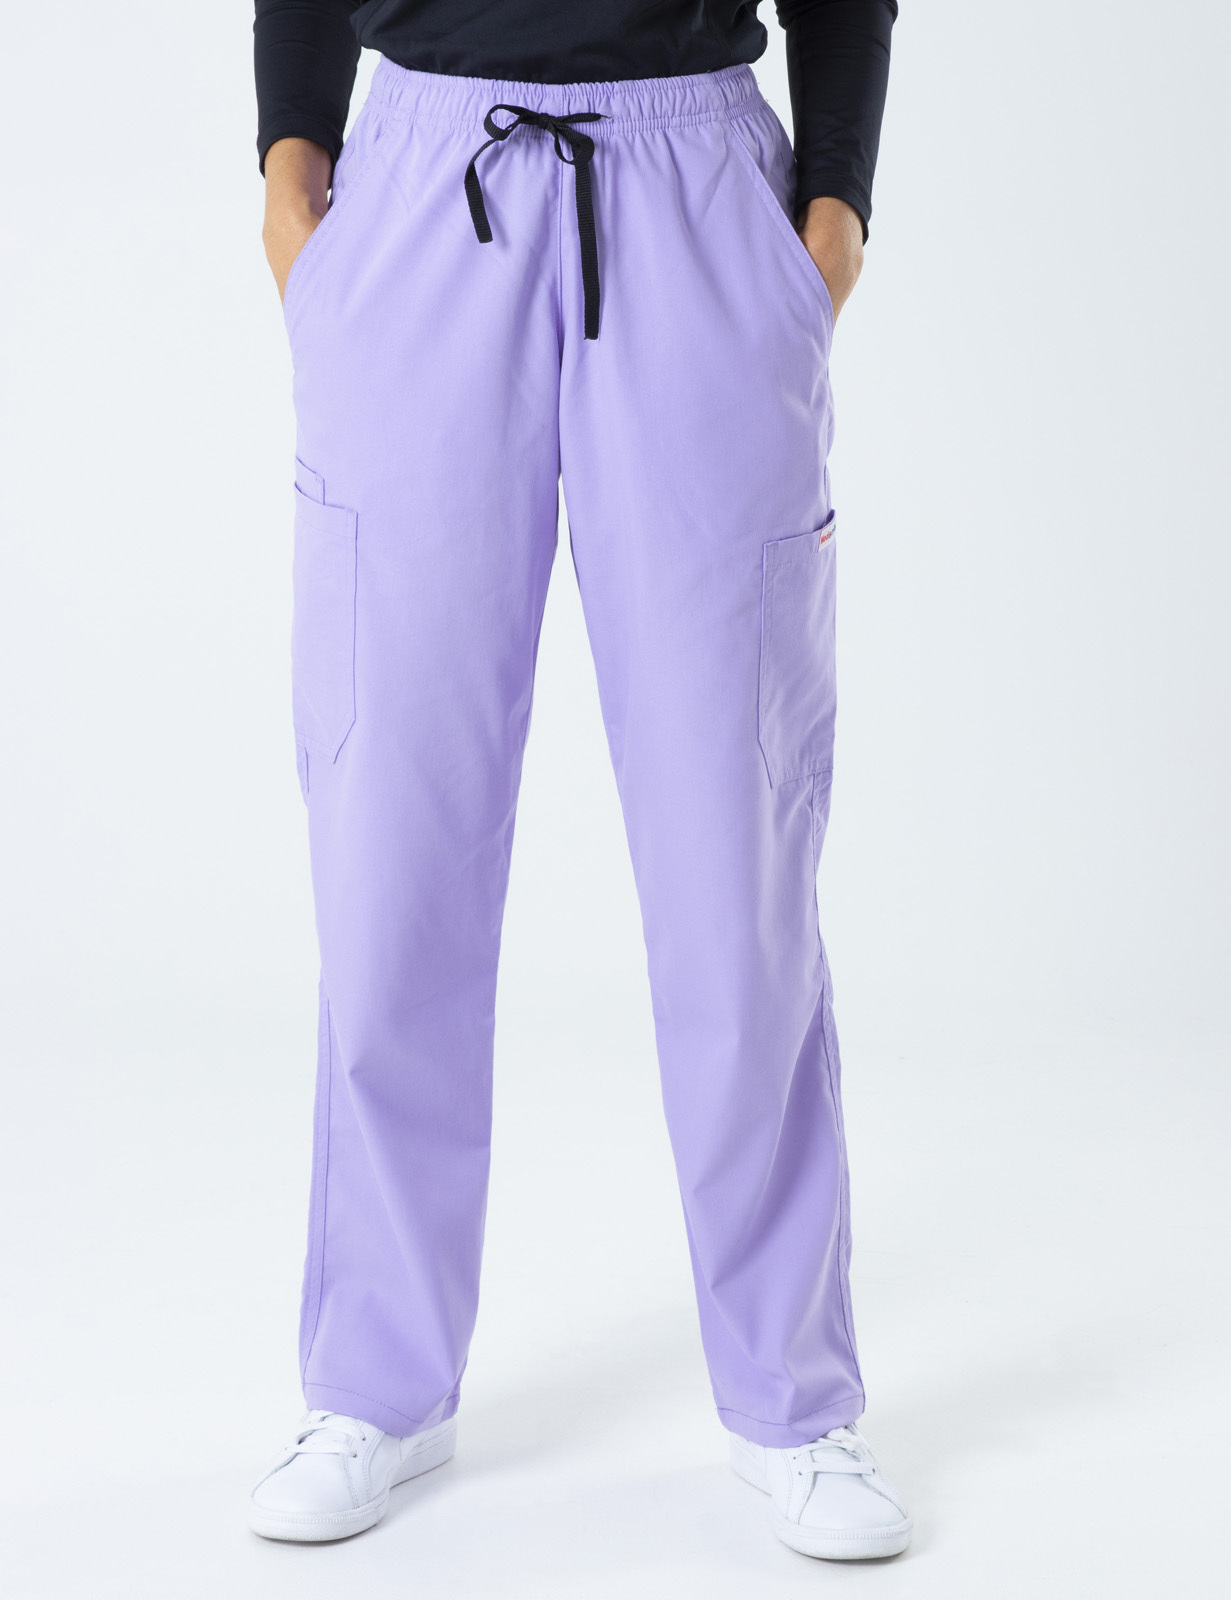 Women's Cargo Performance Pants - Lilac - 3X Large